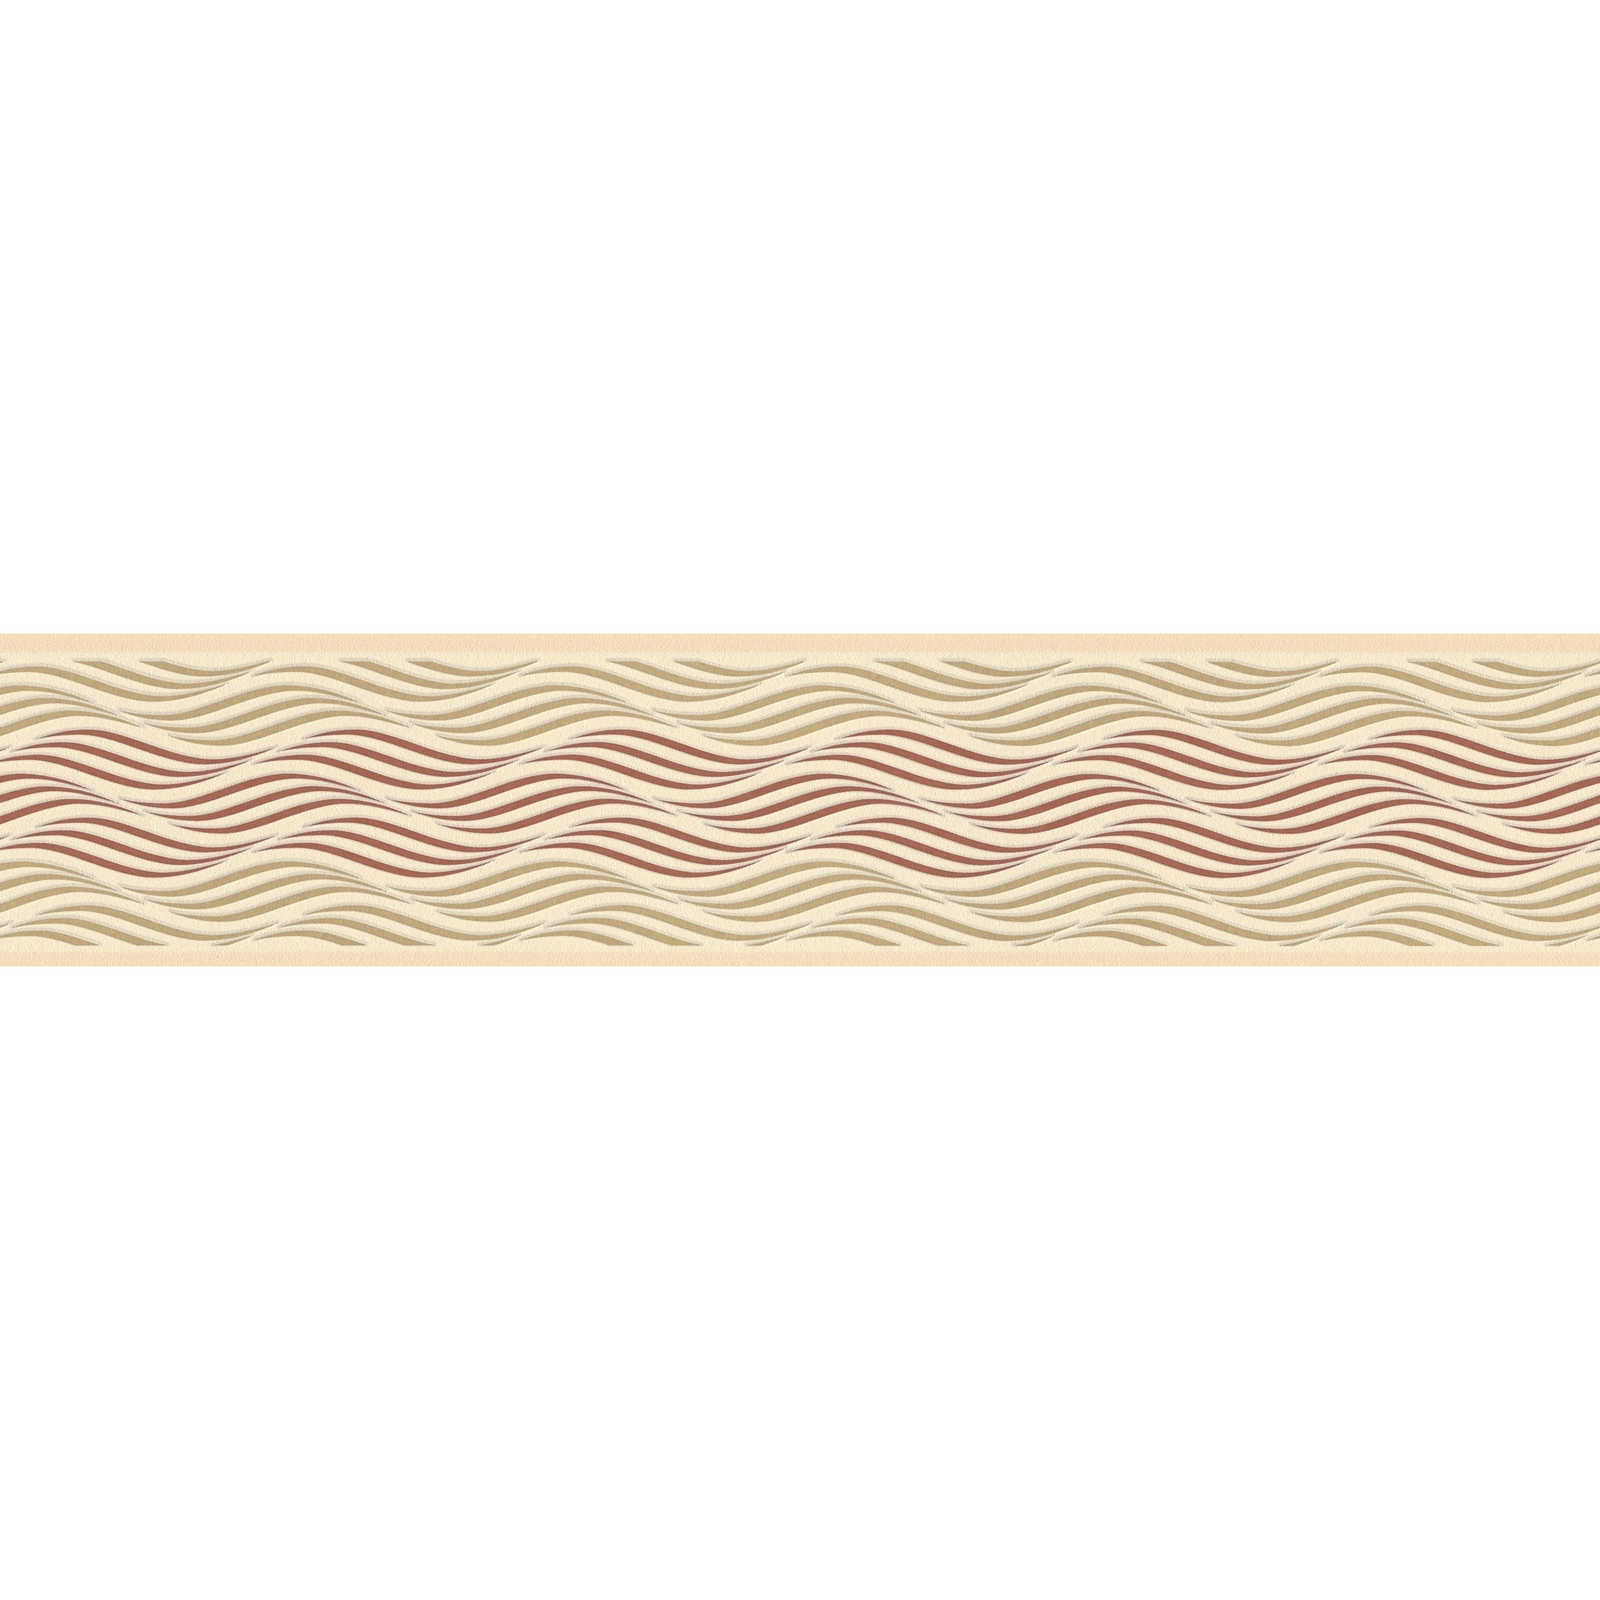         Border with glitter effect & wave pattern - Beige, Brown
    